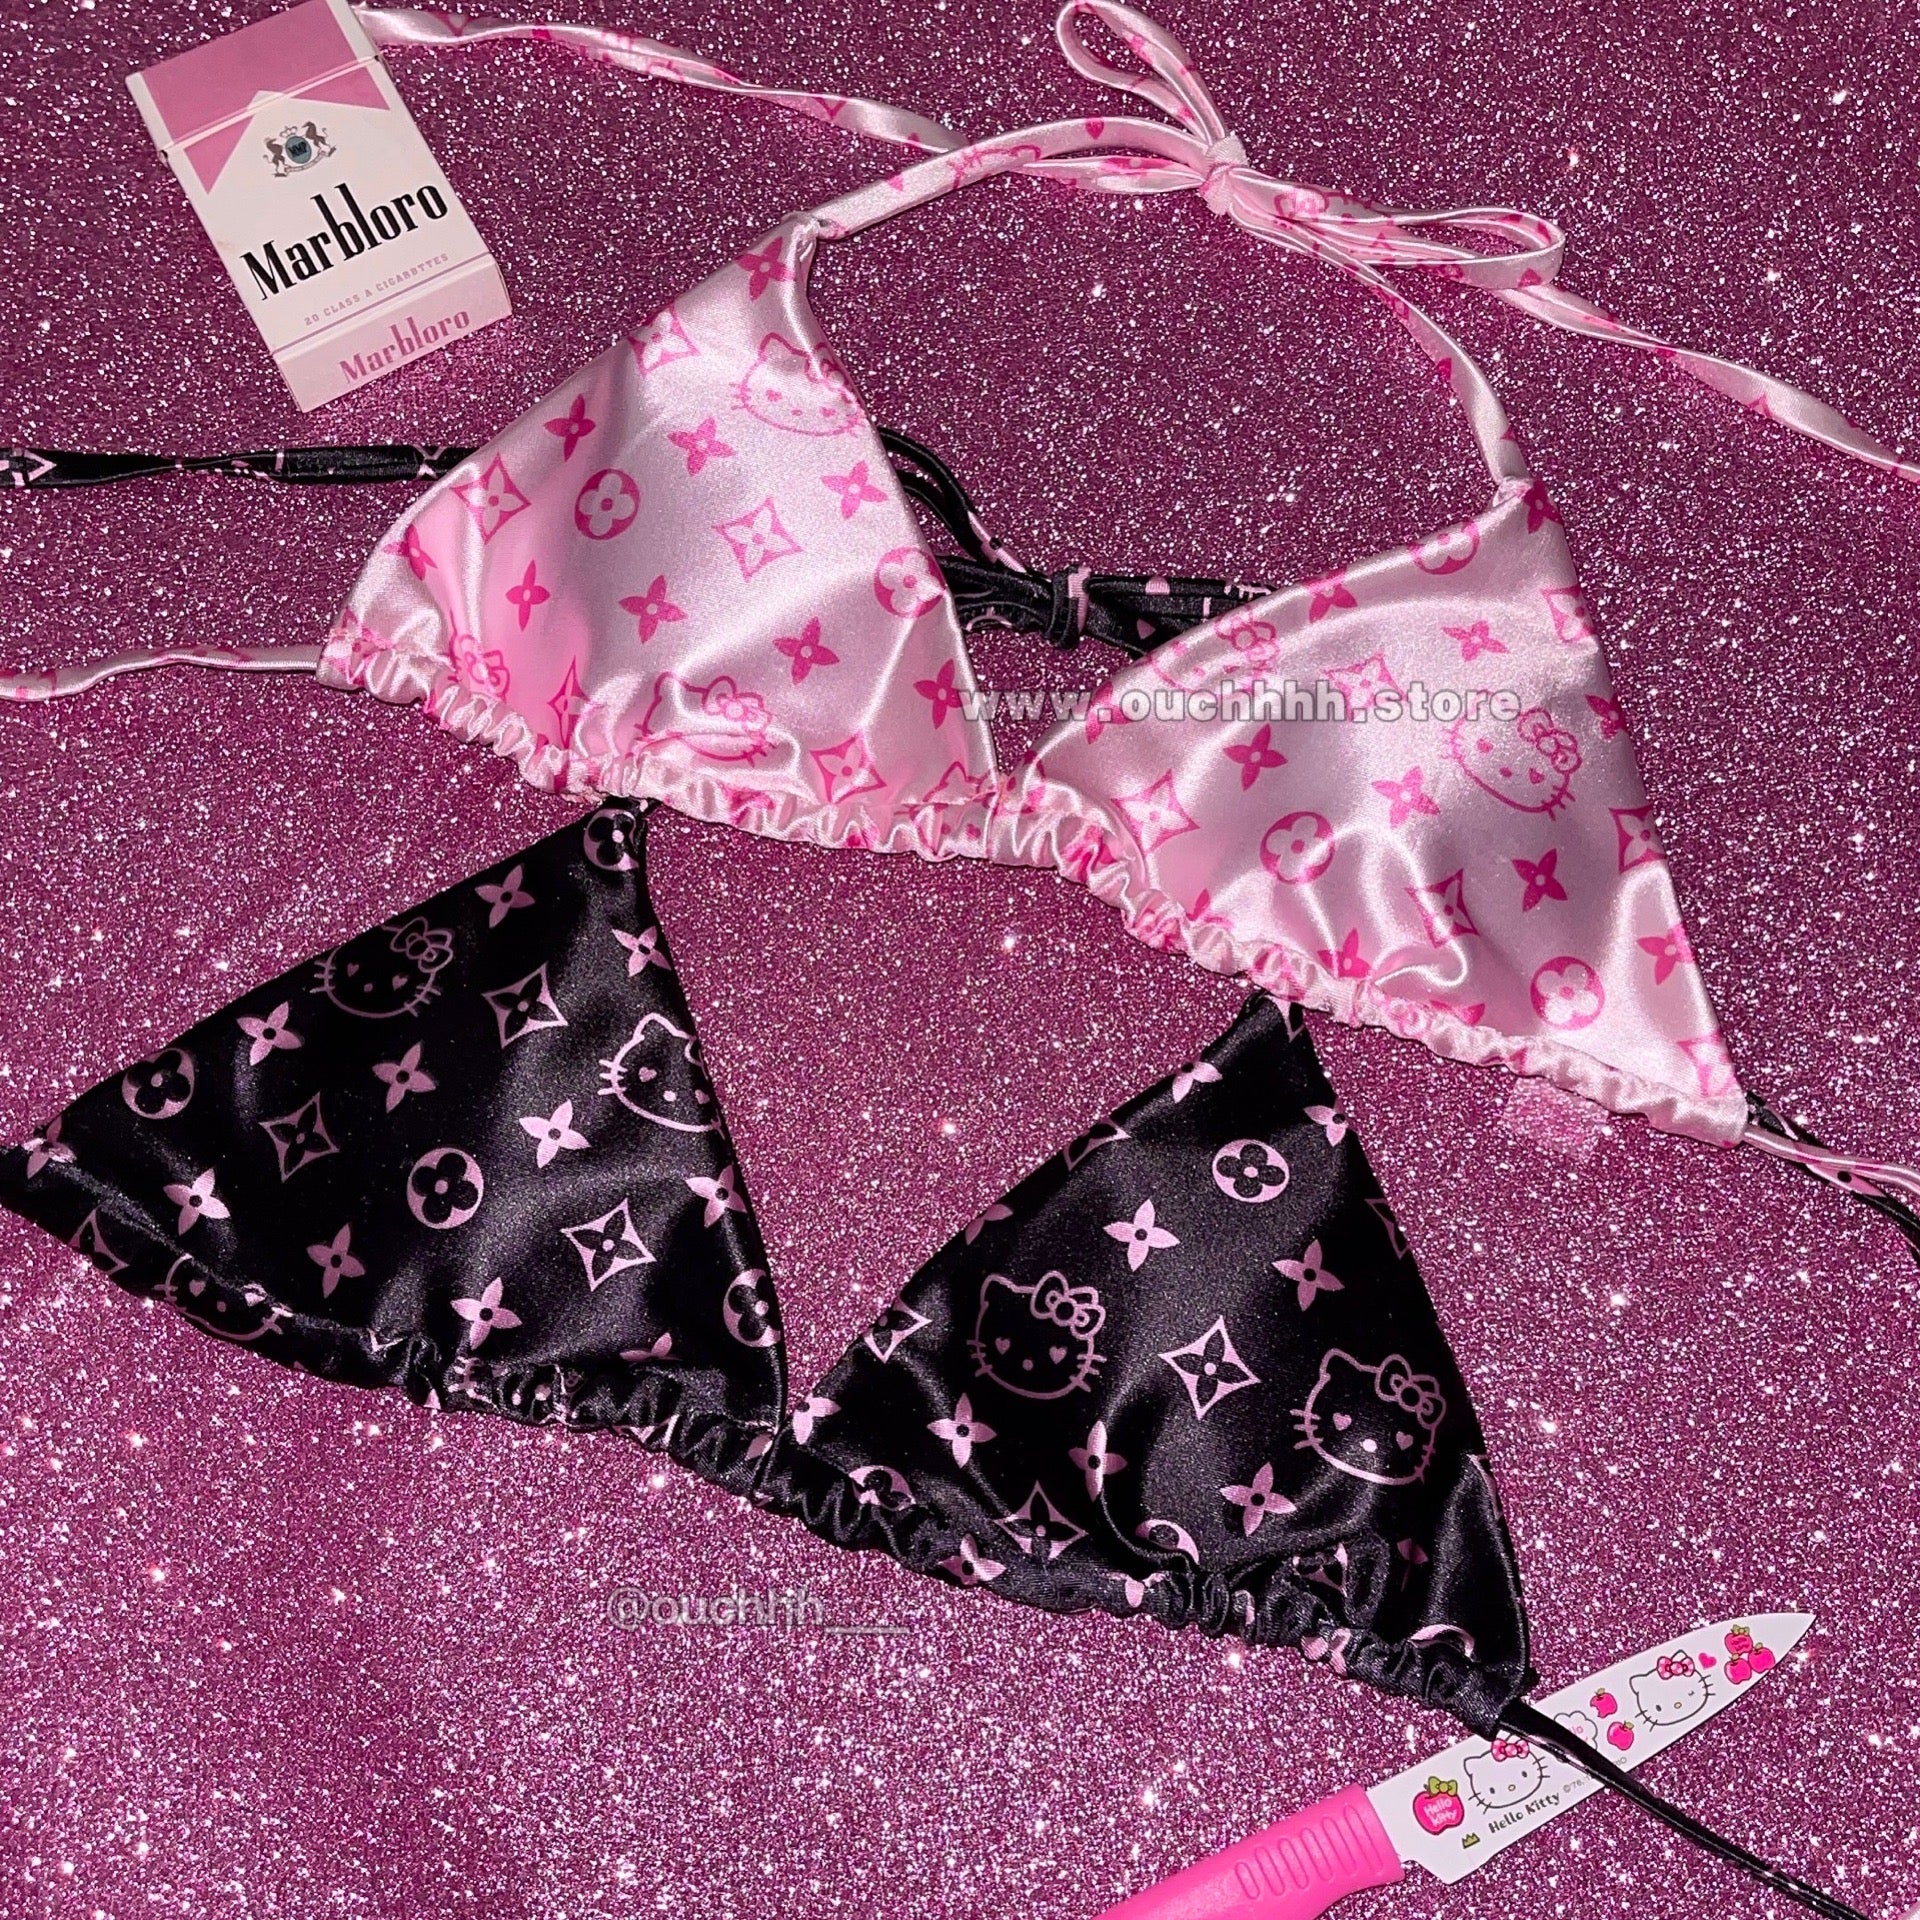 Hot Pink 3pc LV Bikini